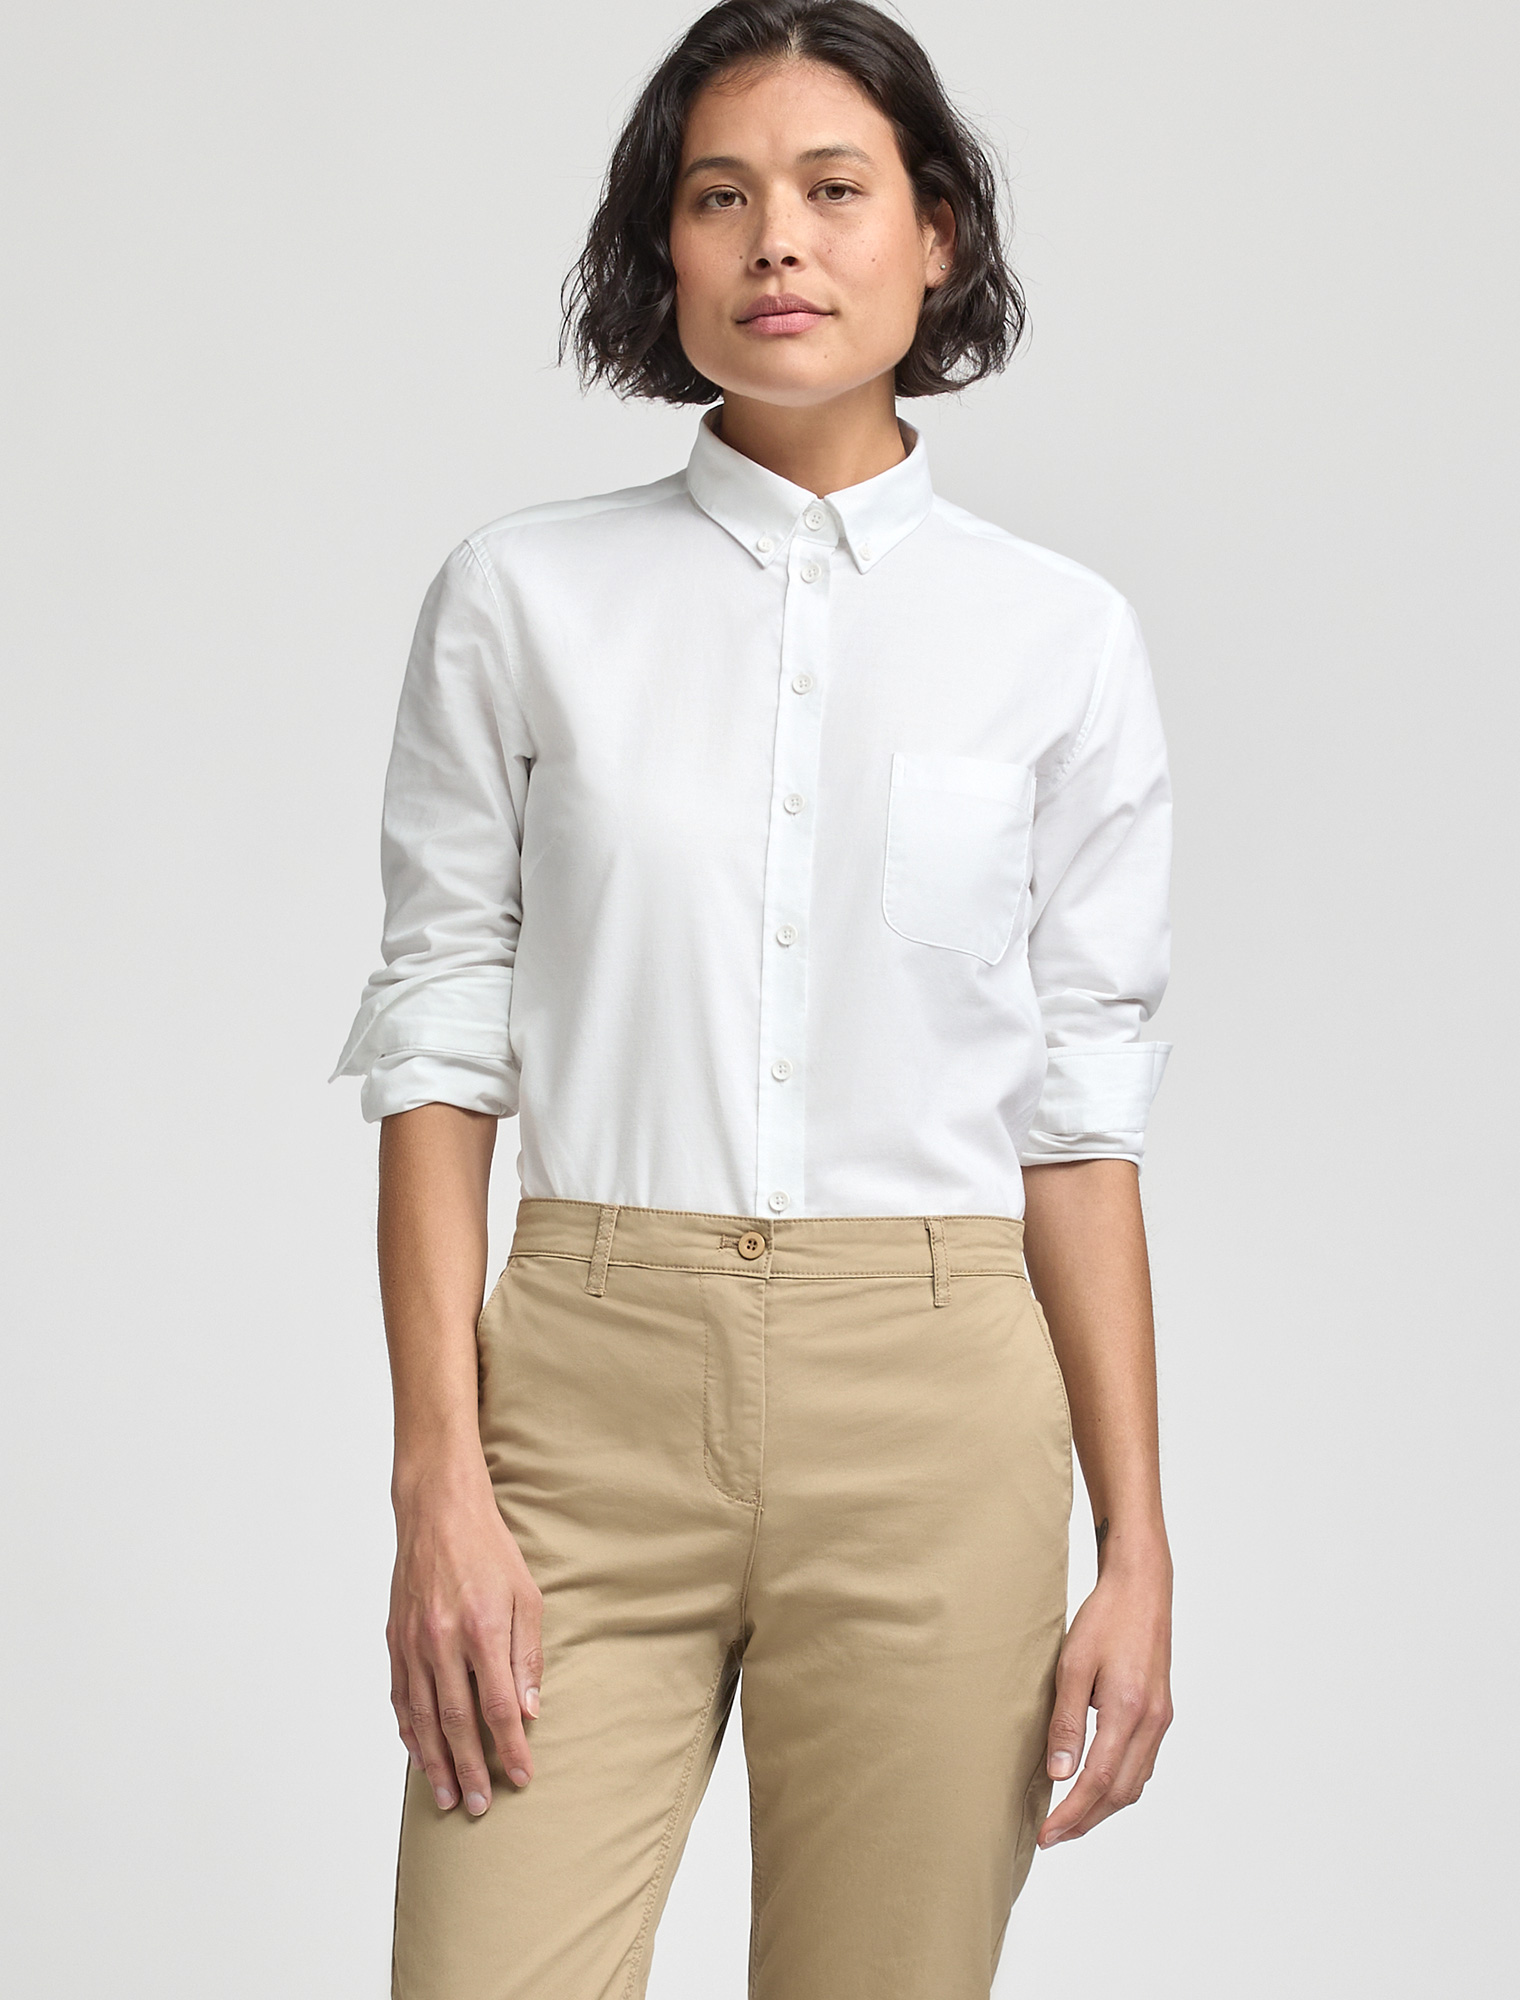 Women’s Smith Oxford Long Sleeve Shirt - White Button Down